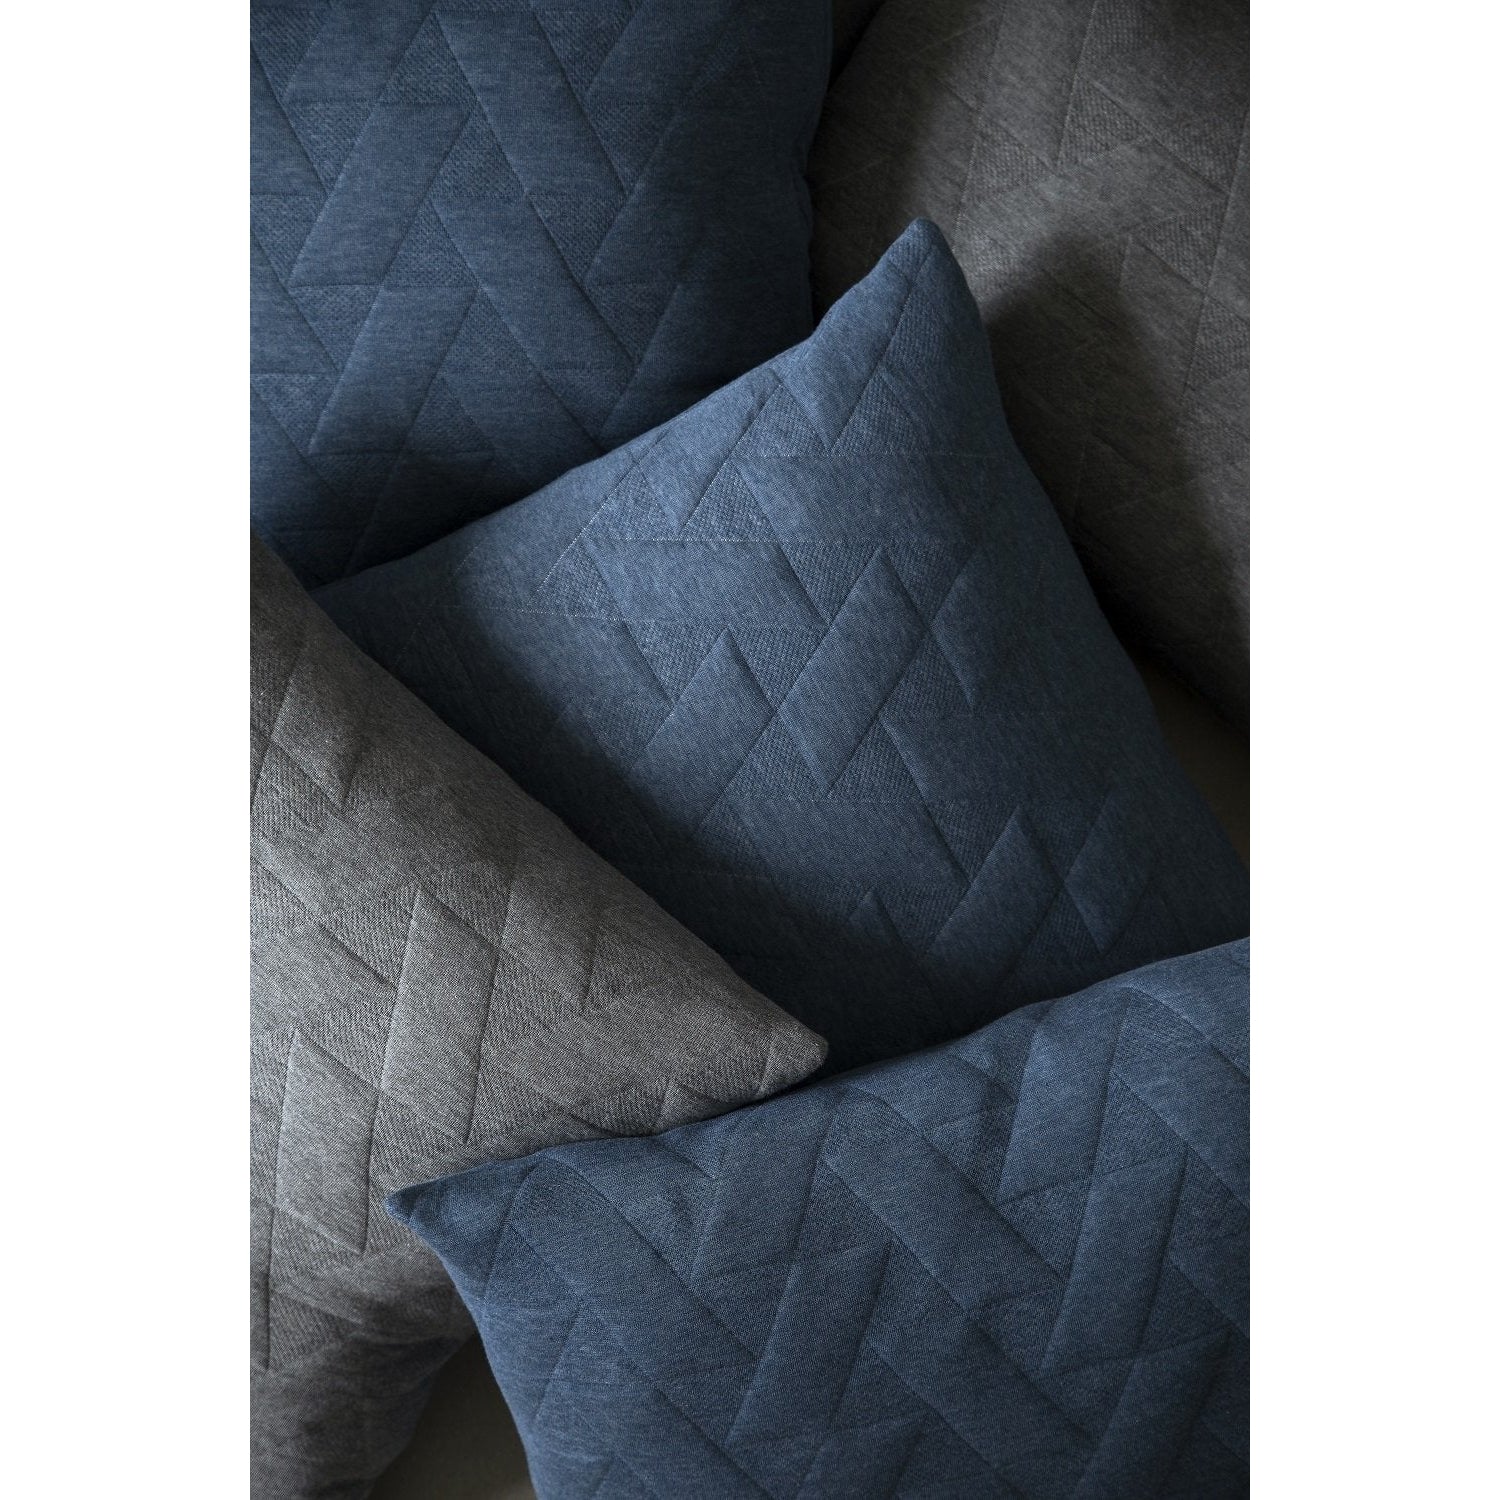 Arkitektmade Finn Juhl Pattern Cushion, Gray 40x60